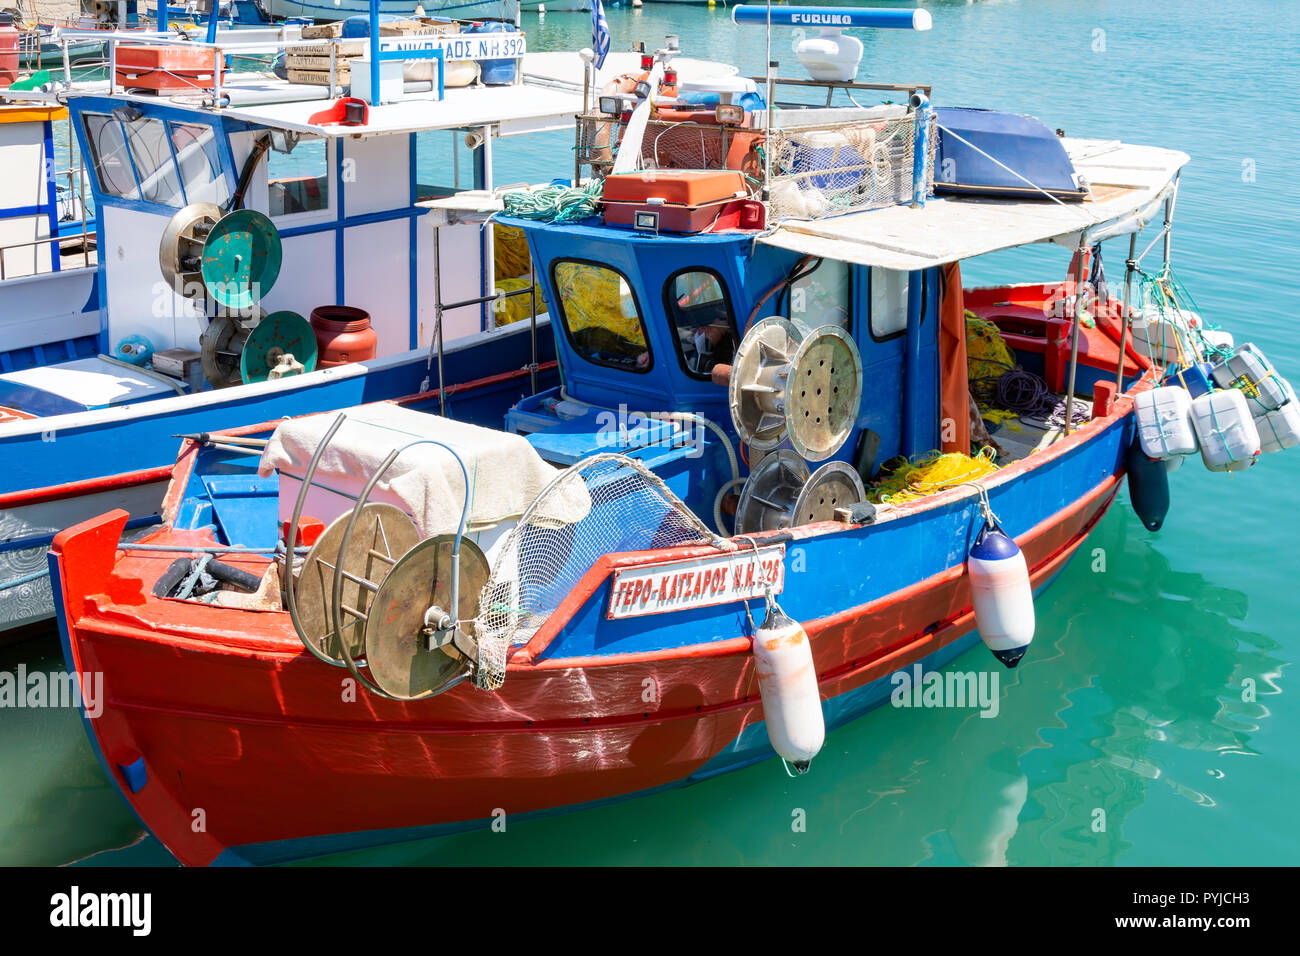 Traditional, wooden fishing boat, Heraklion harbour, Heraklion (Irakleio), Irakleio Region, Crete (Kriti), Greece Stock Photo